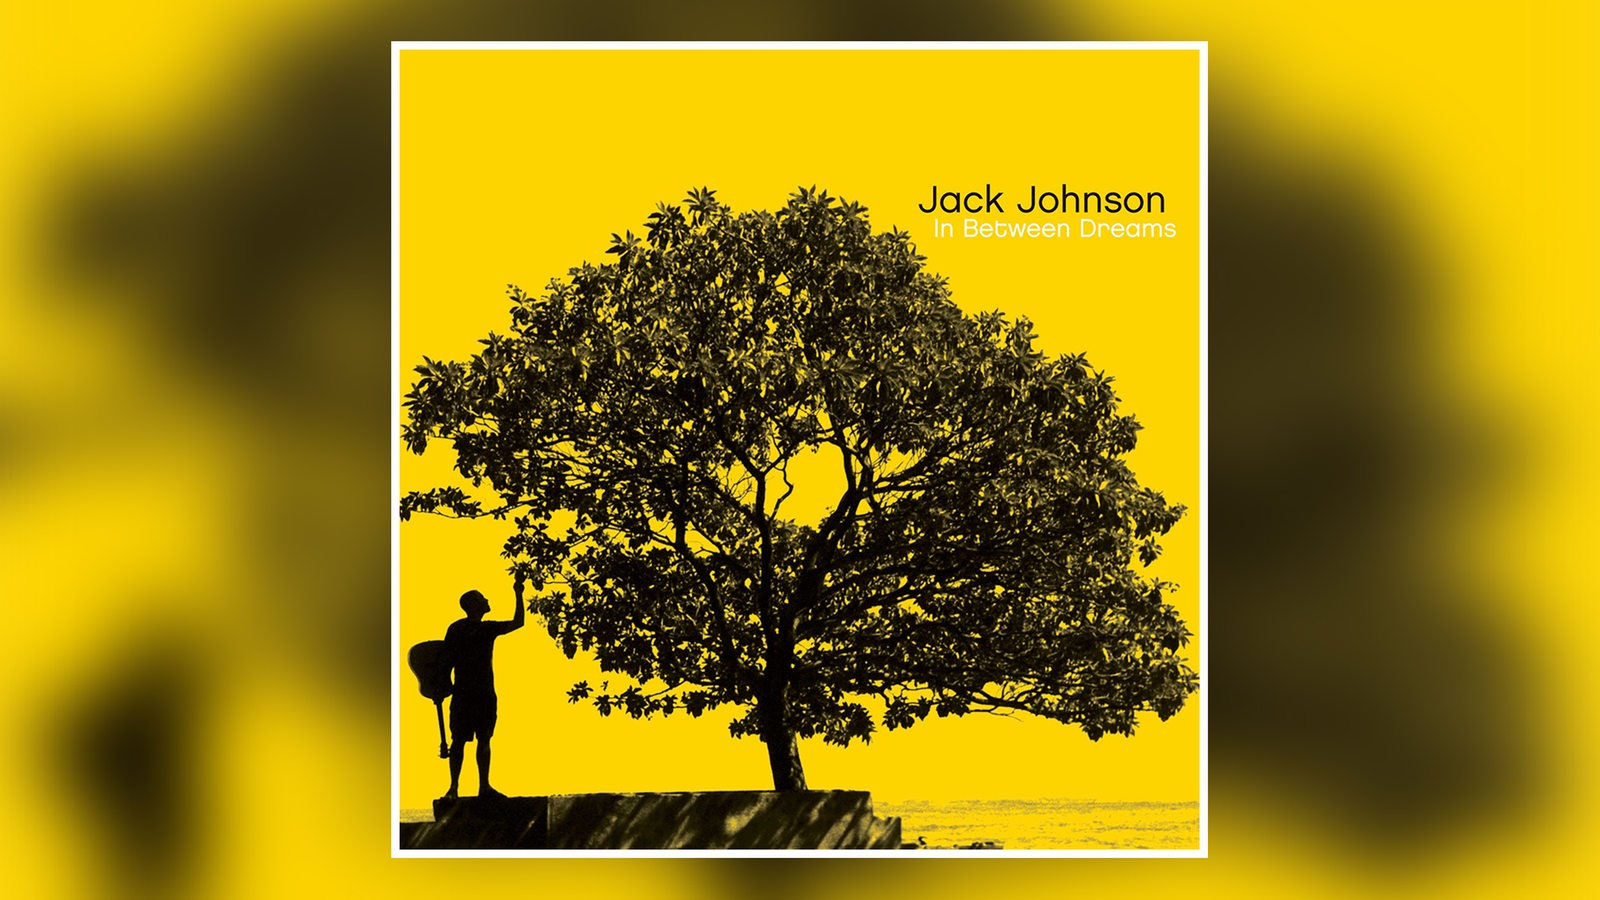 Albumcover: Jack Johnson "In Between Dreams"